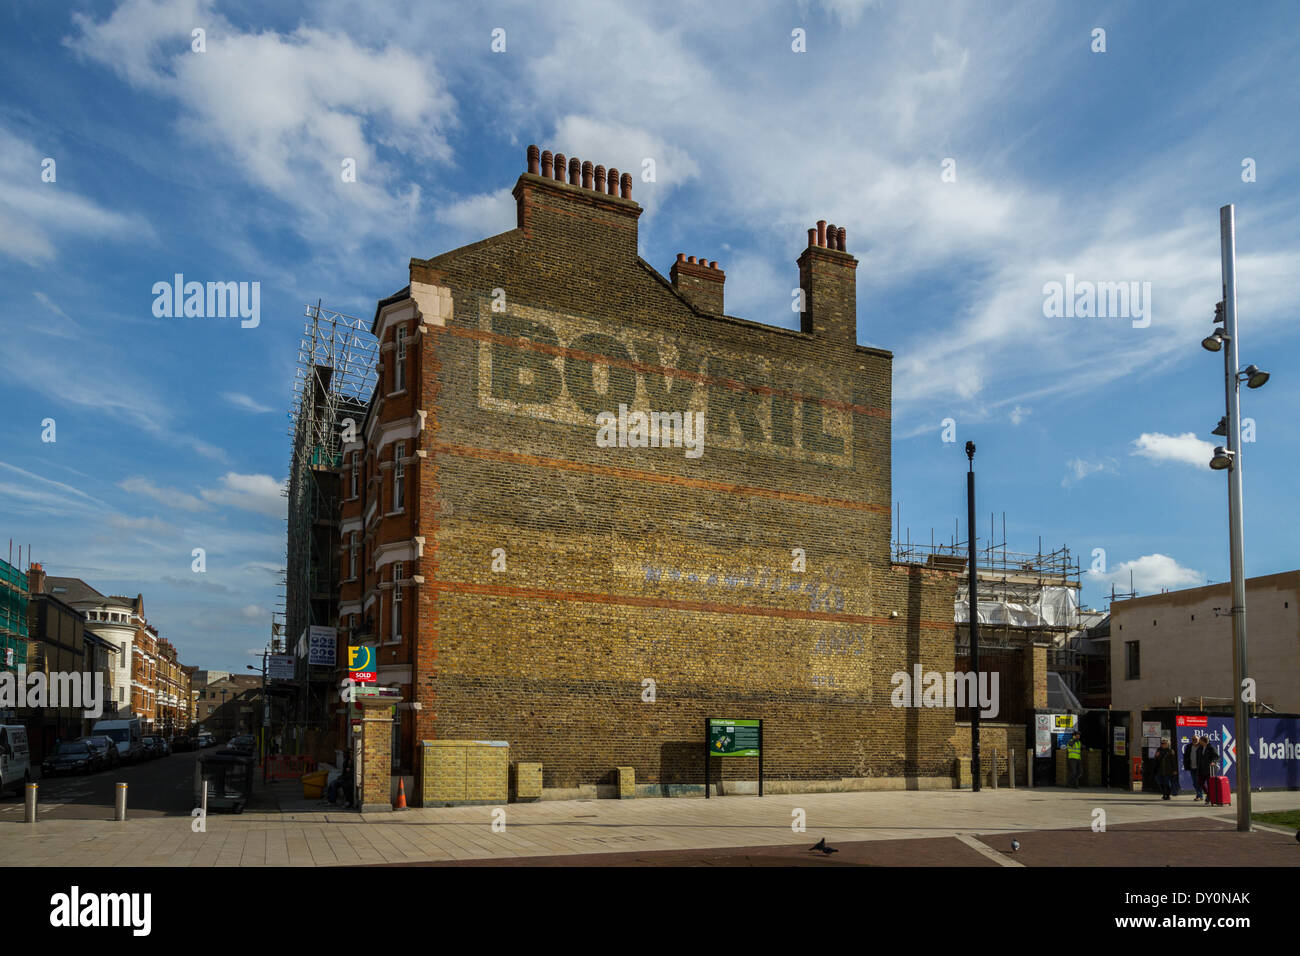 Bovril - vintage advert in Brixton, south London. Stock Photo